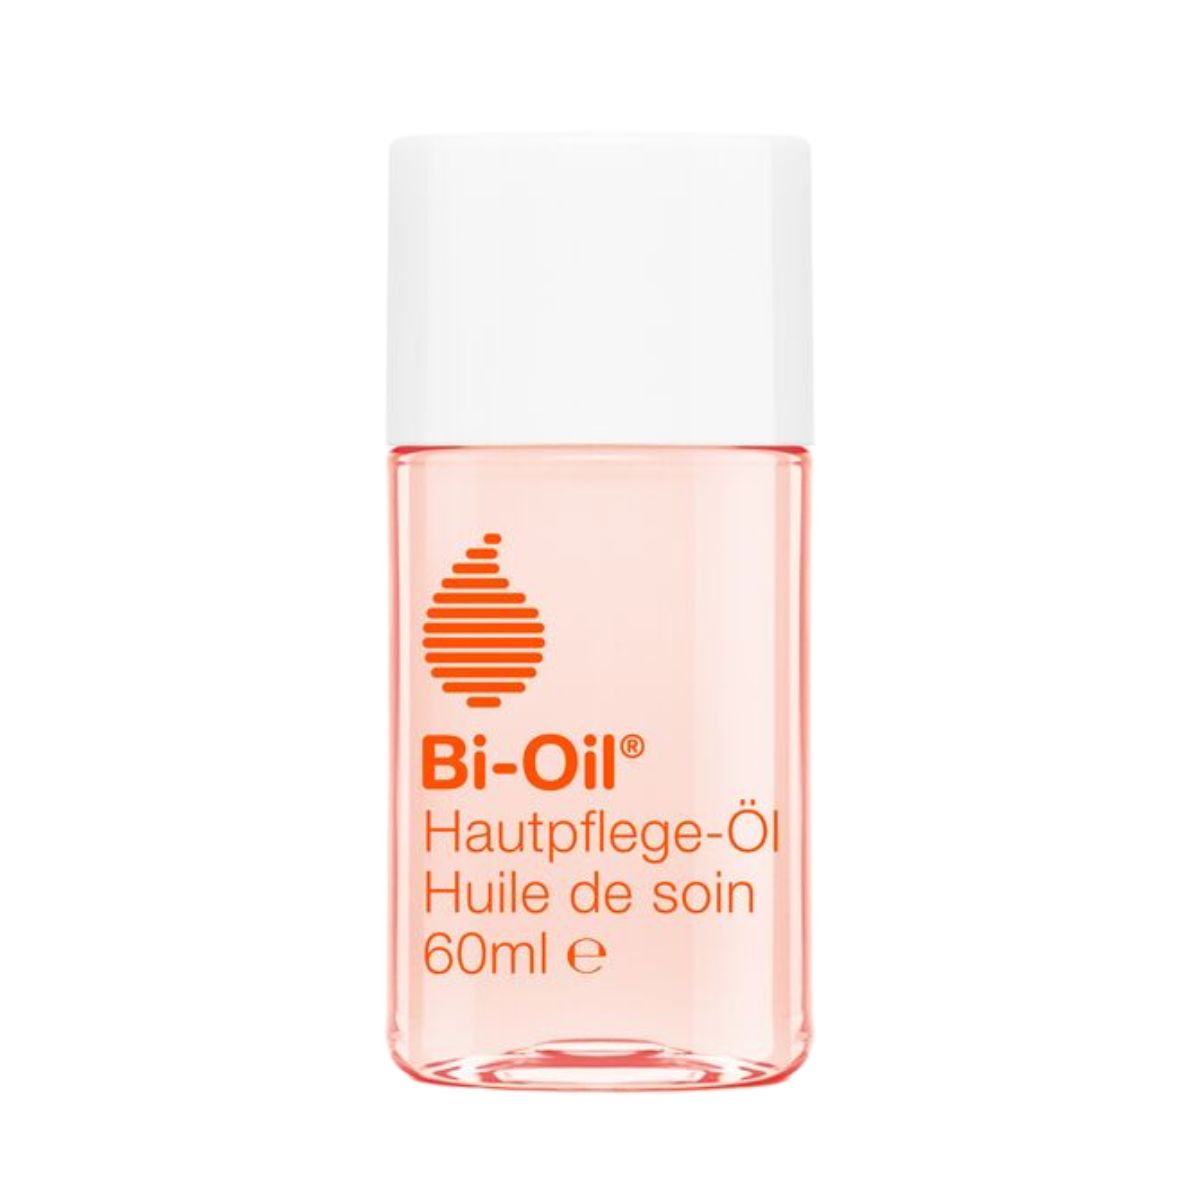 BI-OIL Classic Hautpflegeöl 60 ml